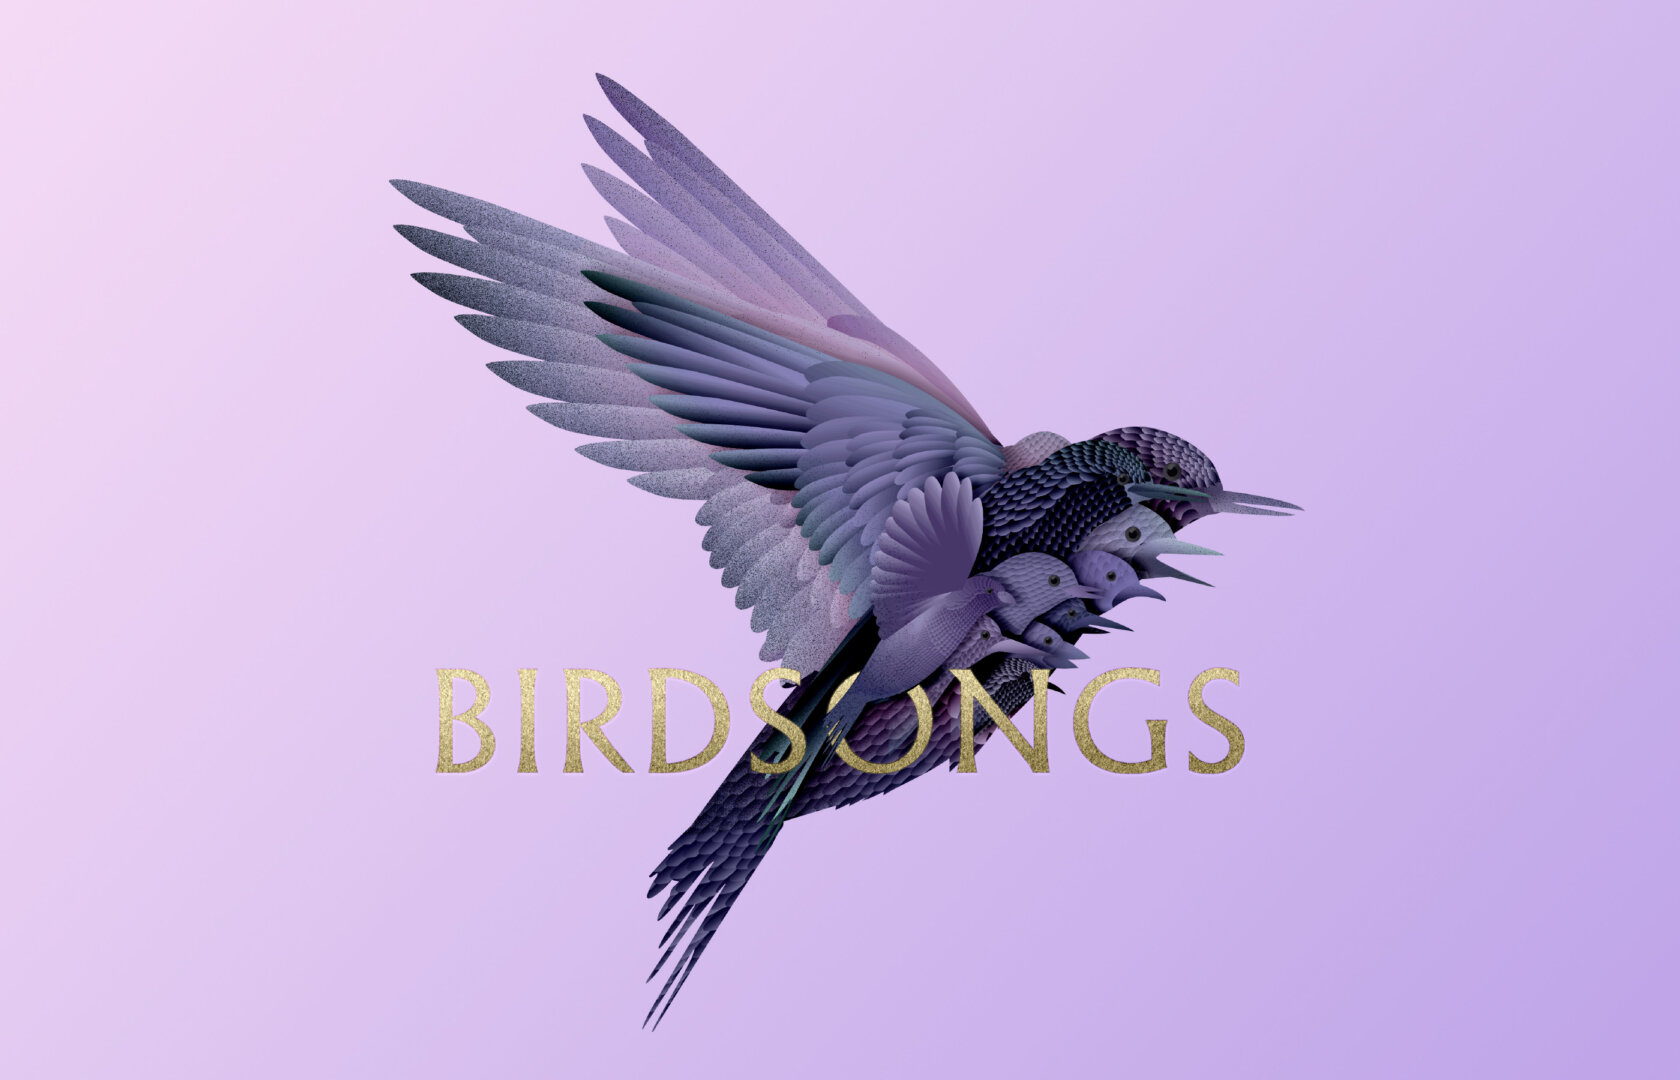 projekt-birdsongs-pablo-luetkenhaus-01-quer